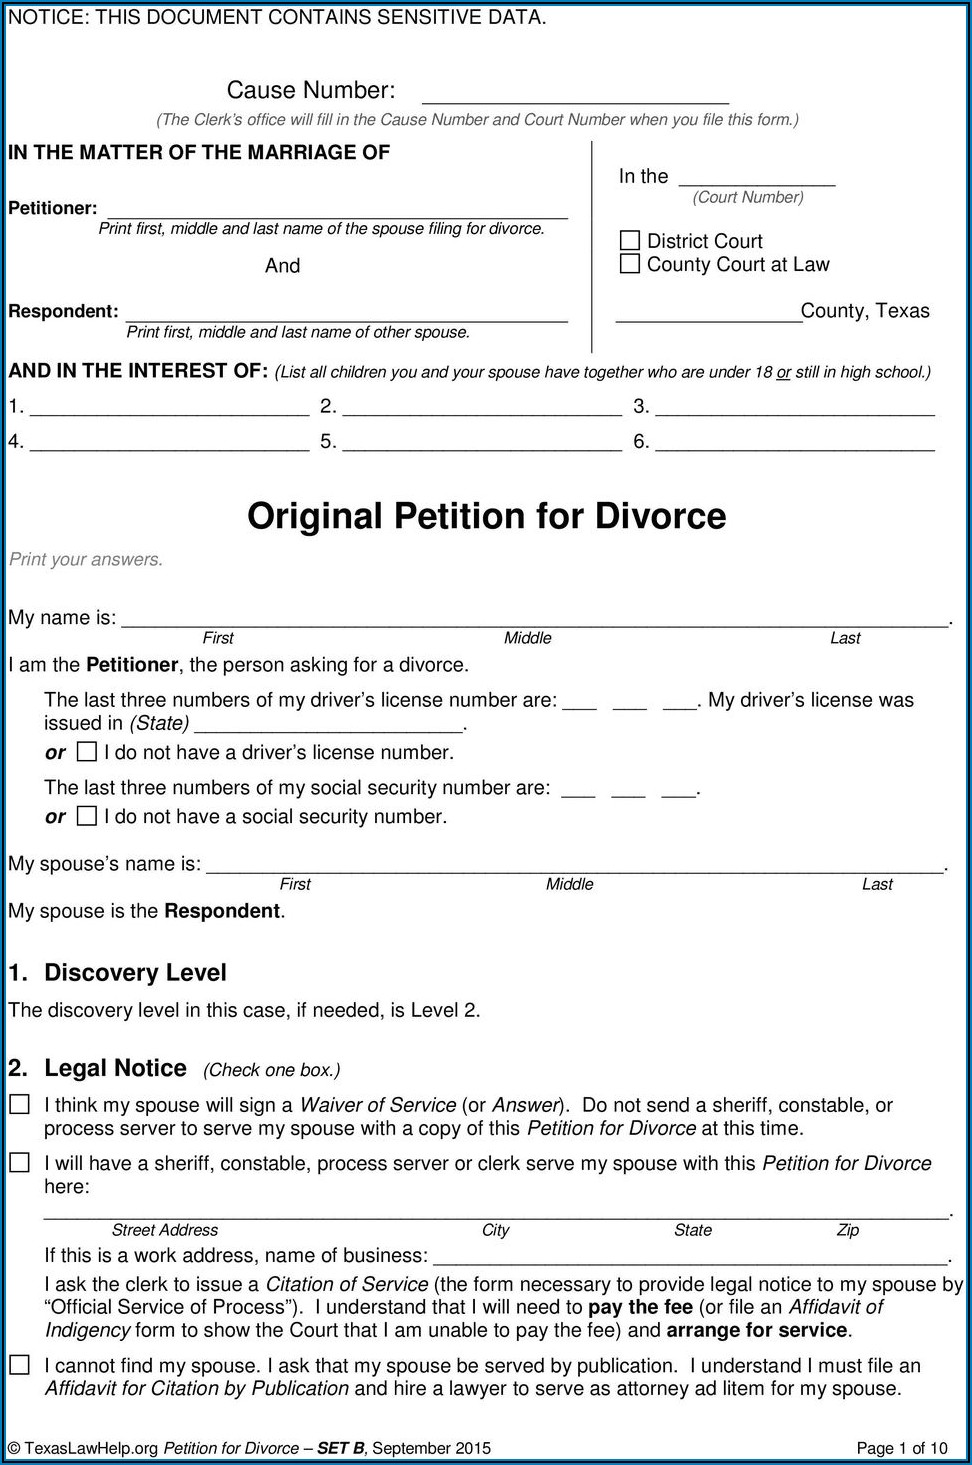 Original Petition For Divorce Form